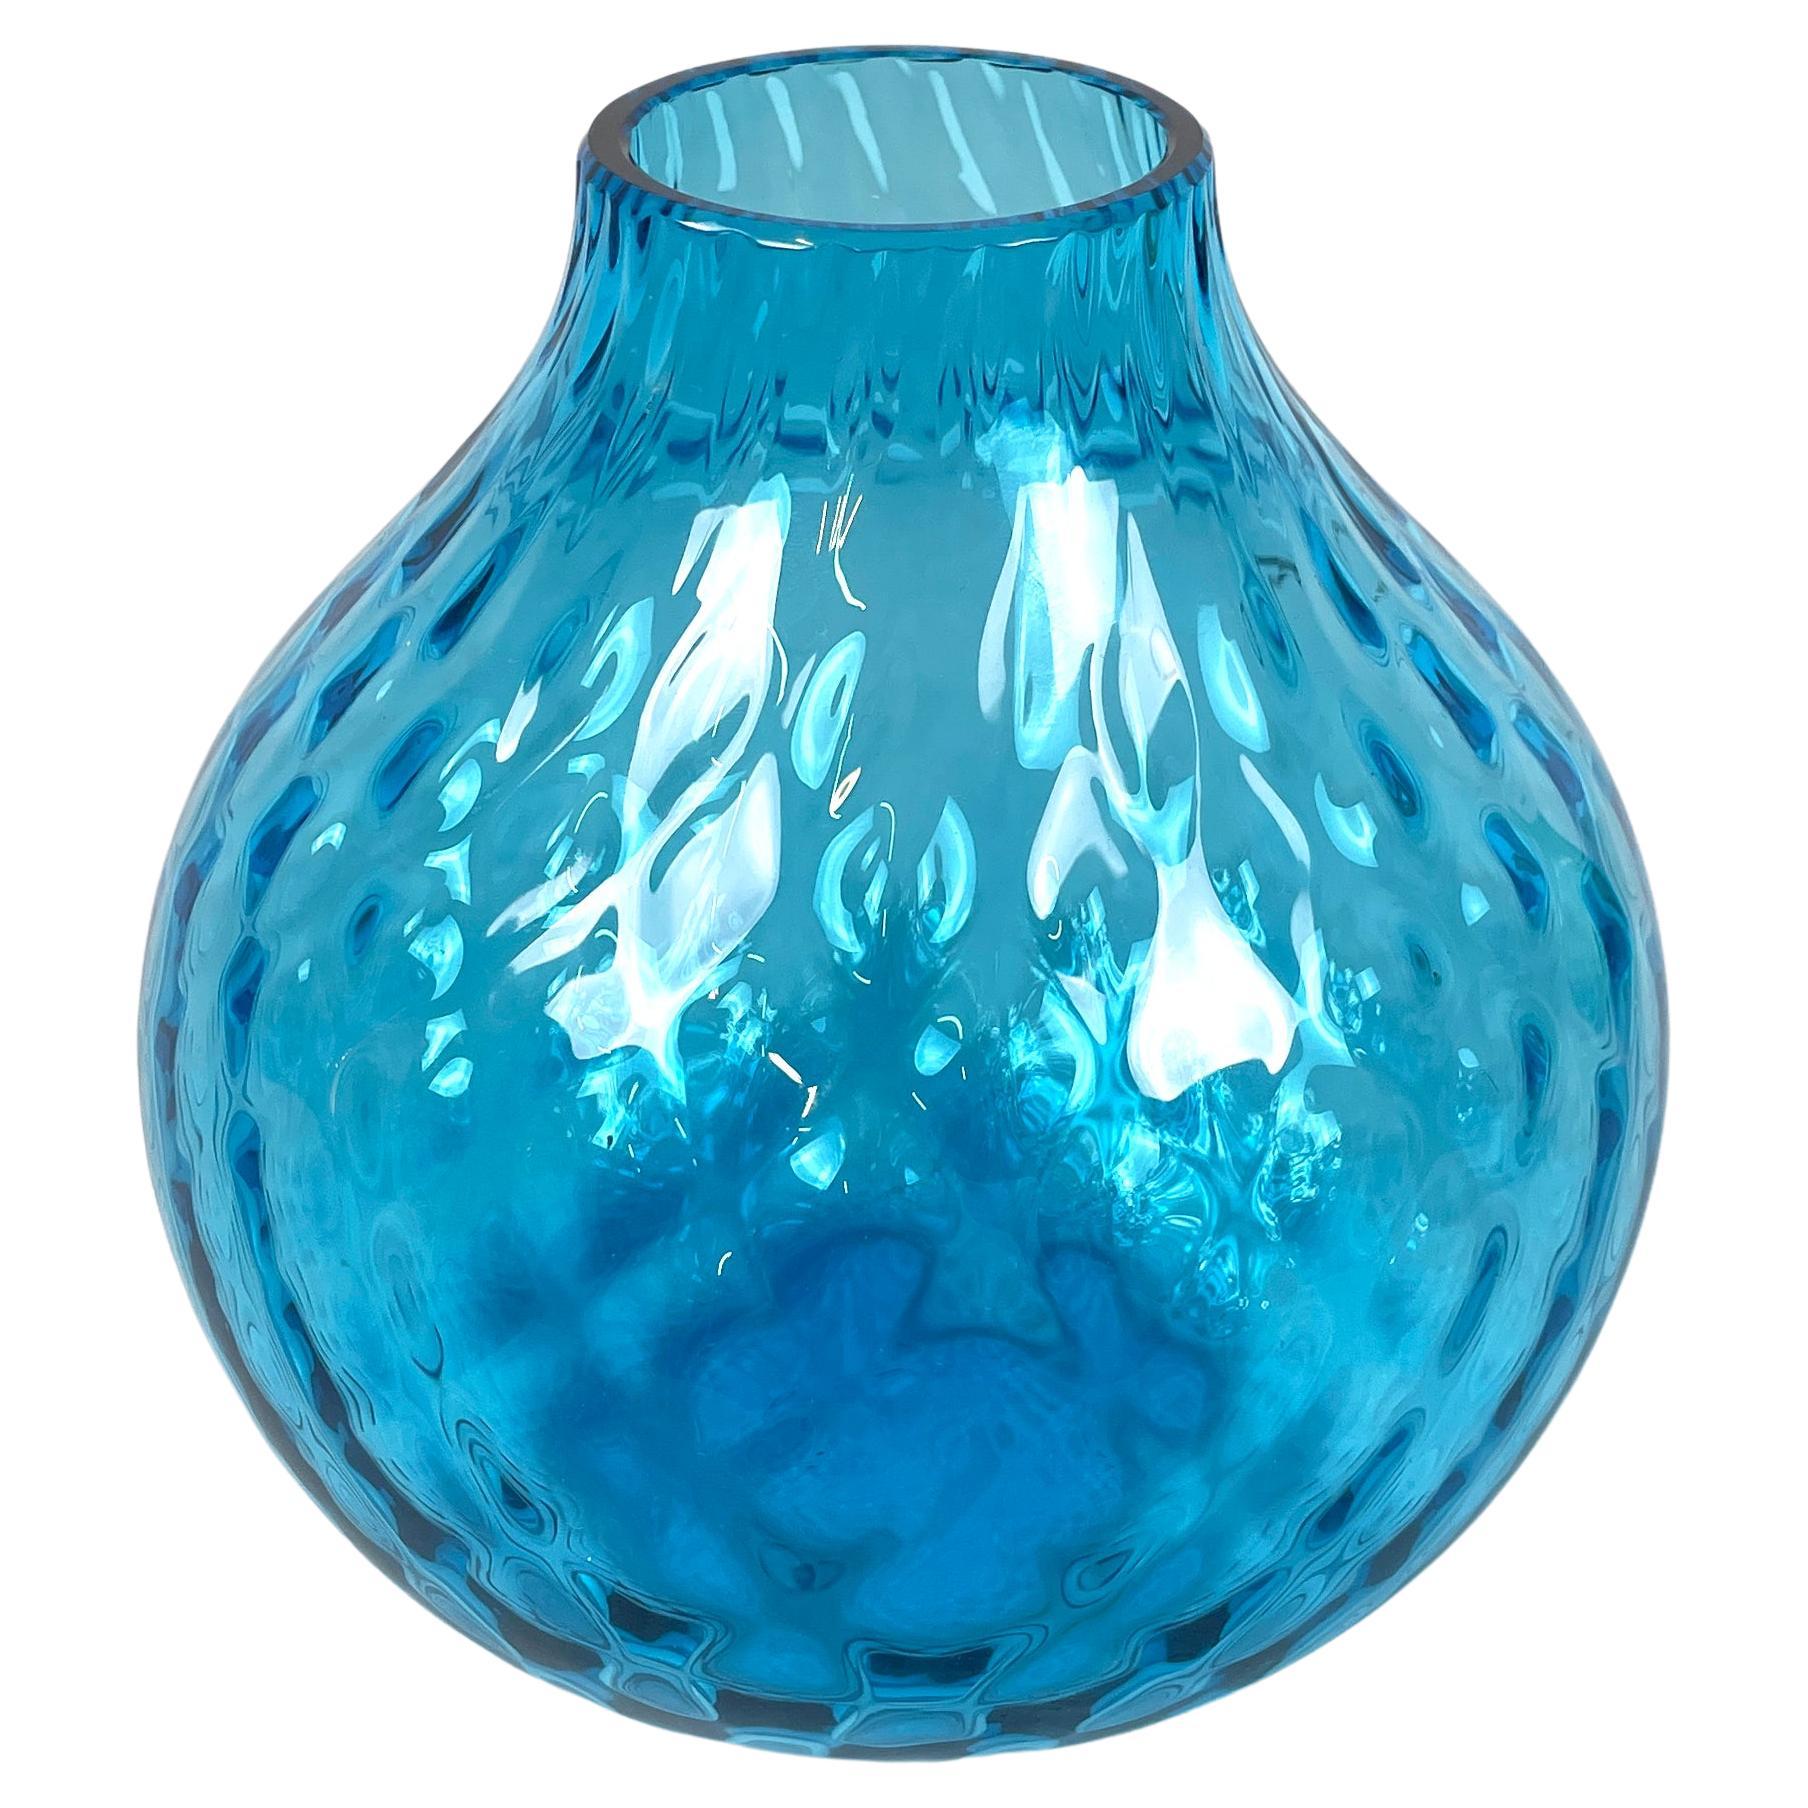 Italian modern Round vase in light blue Murano glass by Venini 1990s